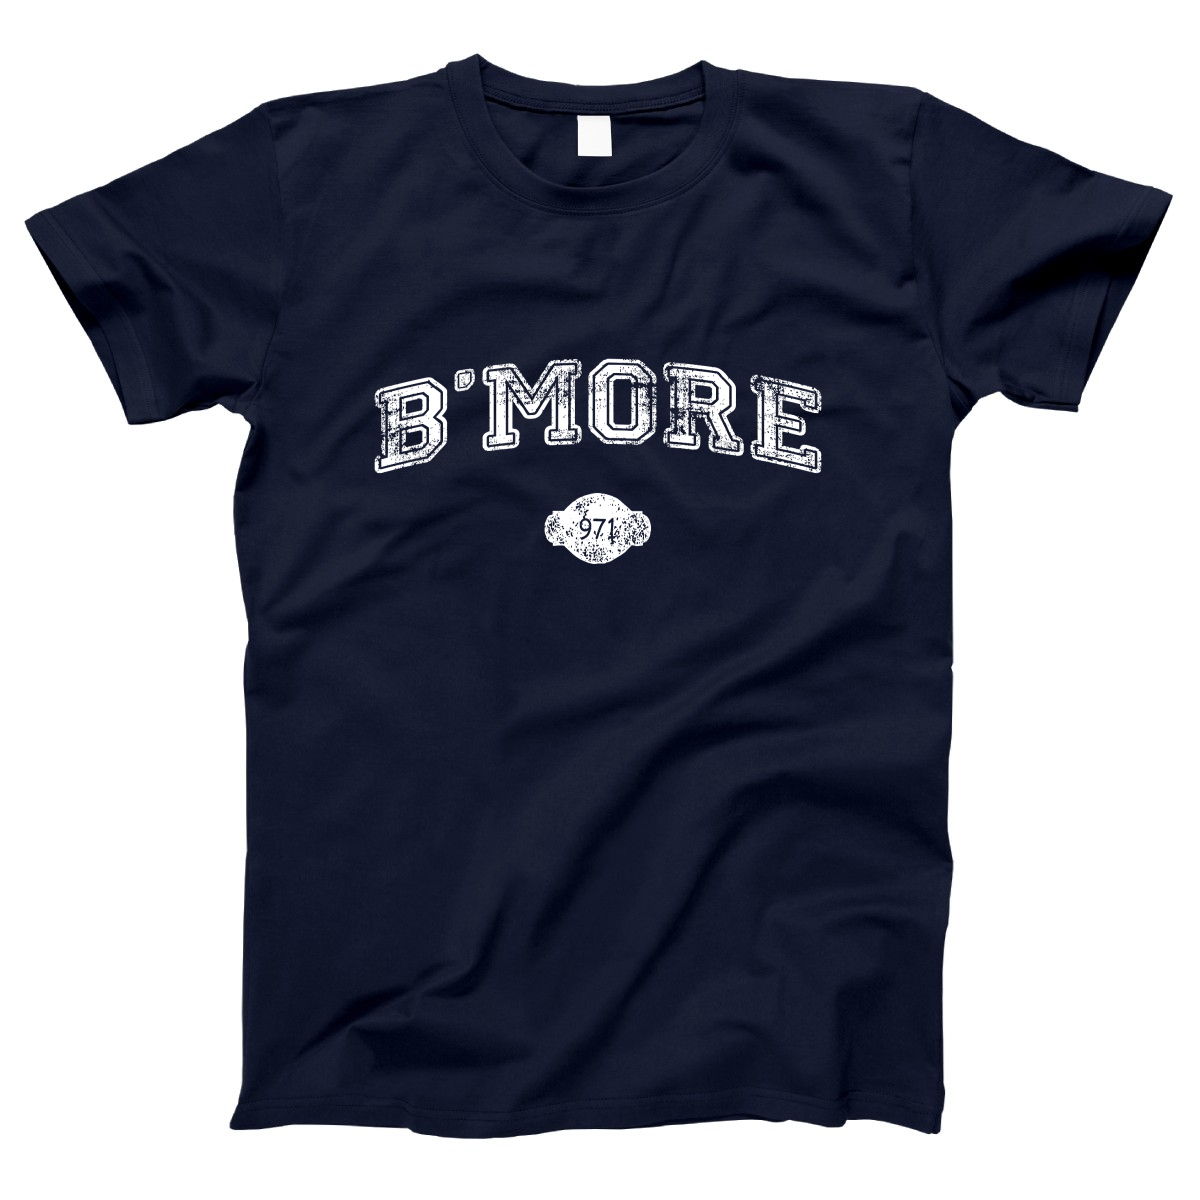 B'more 1729 Represent Women's T-shirt | Navy